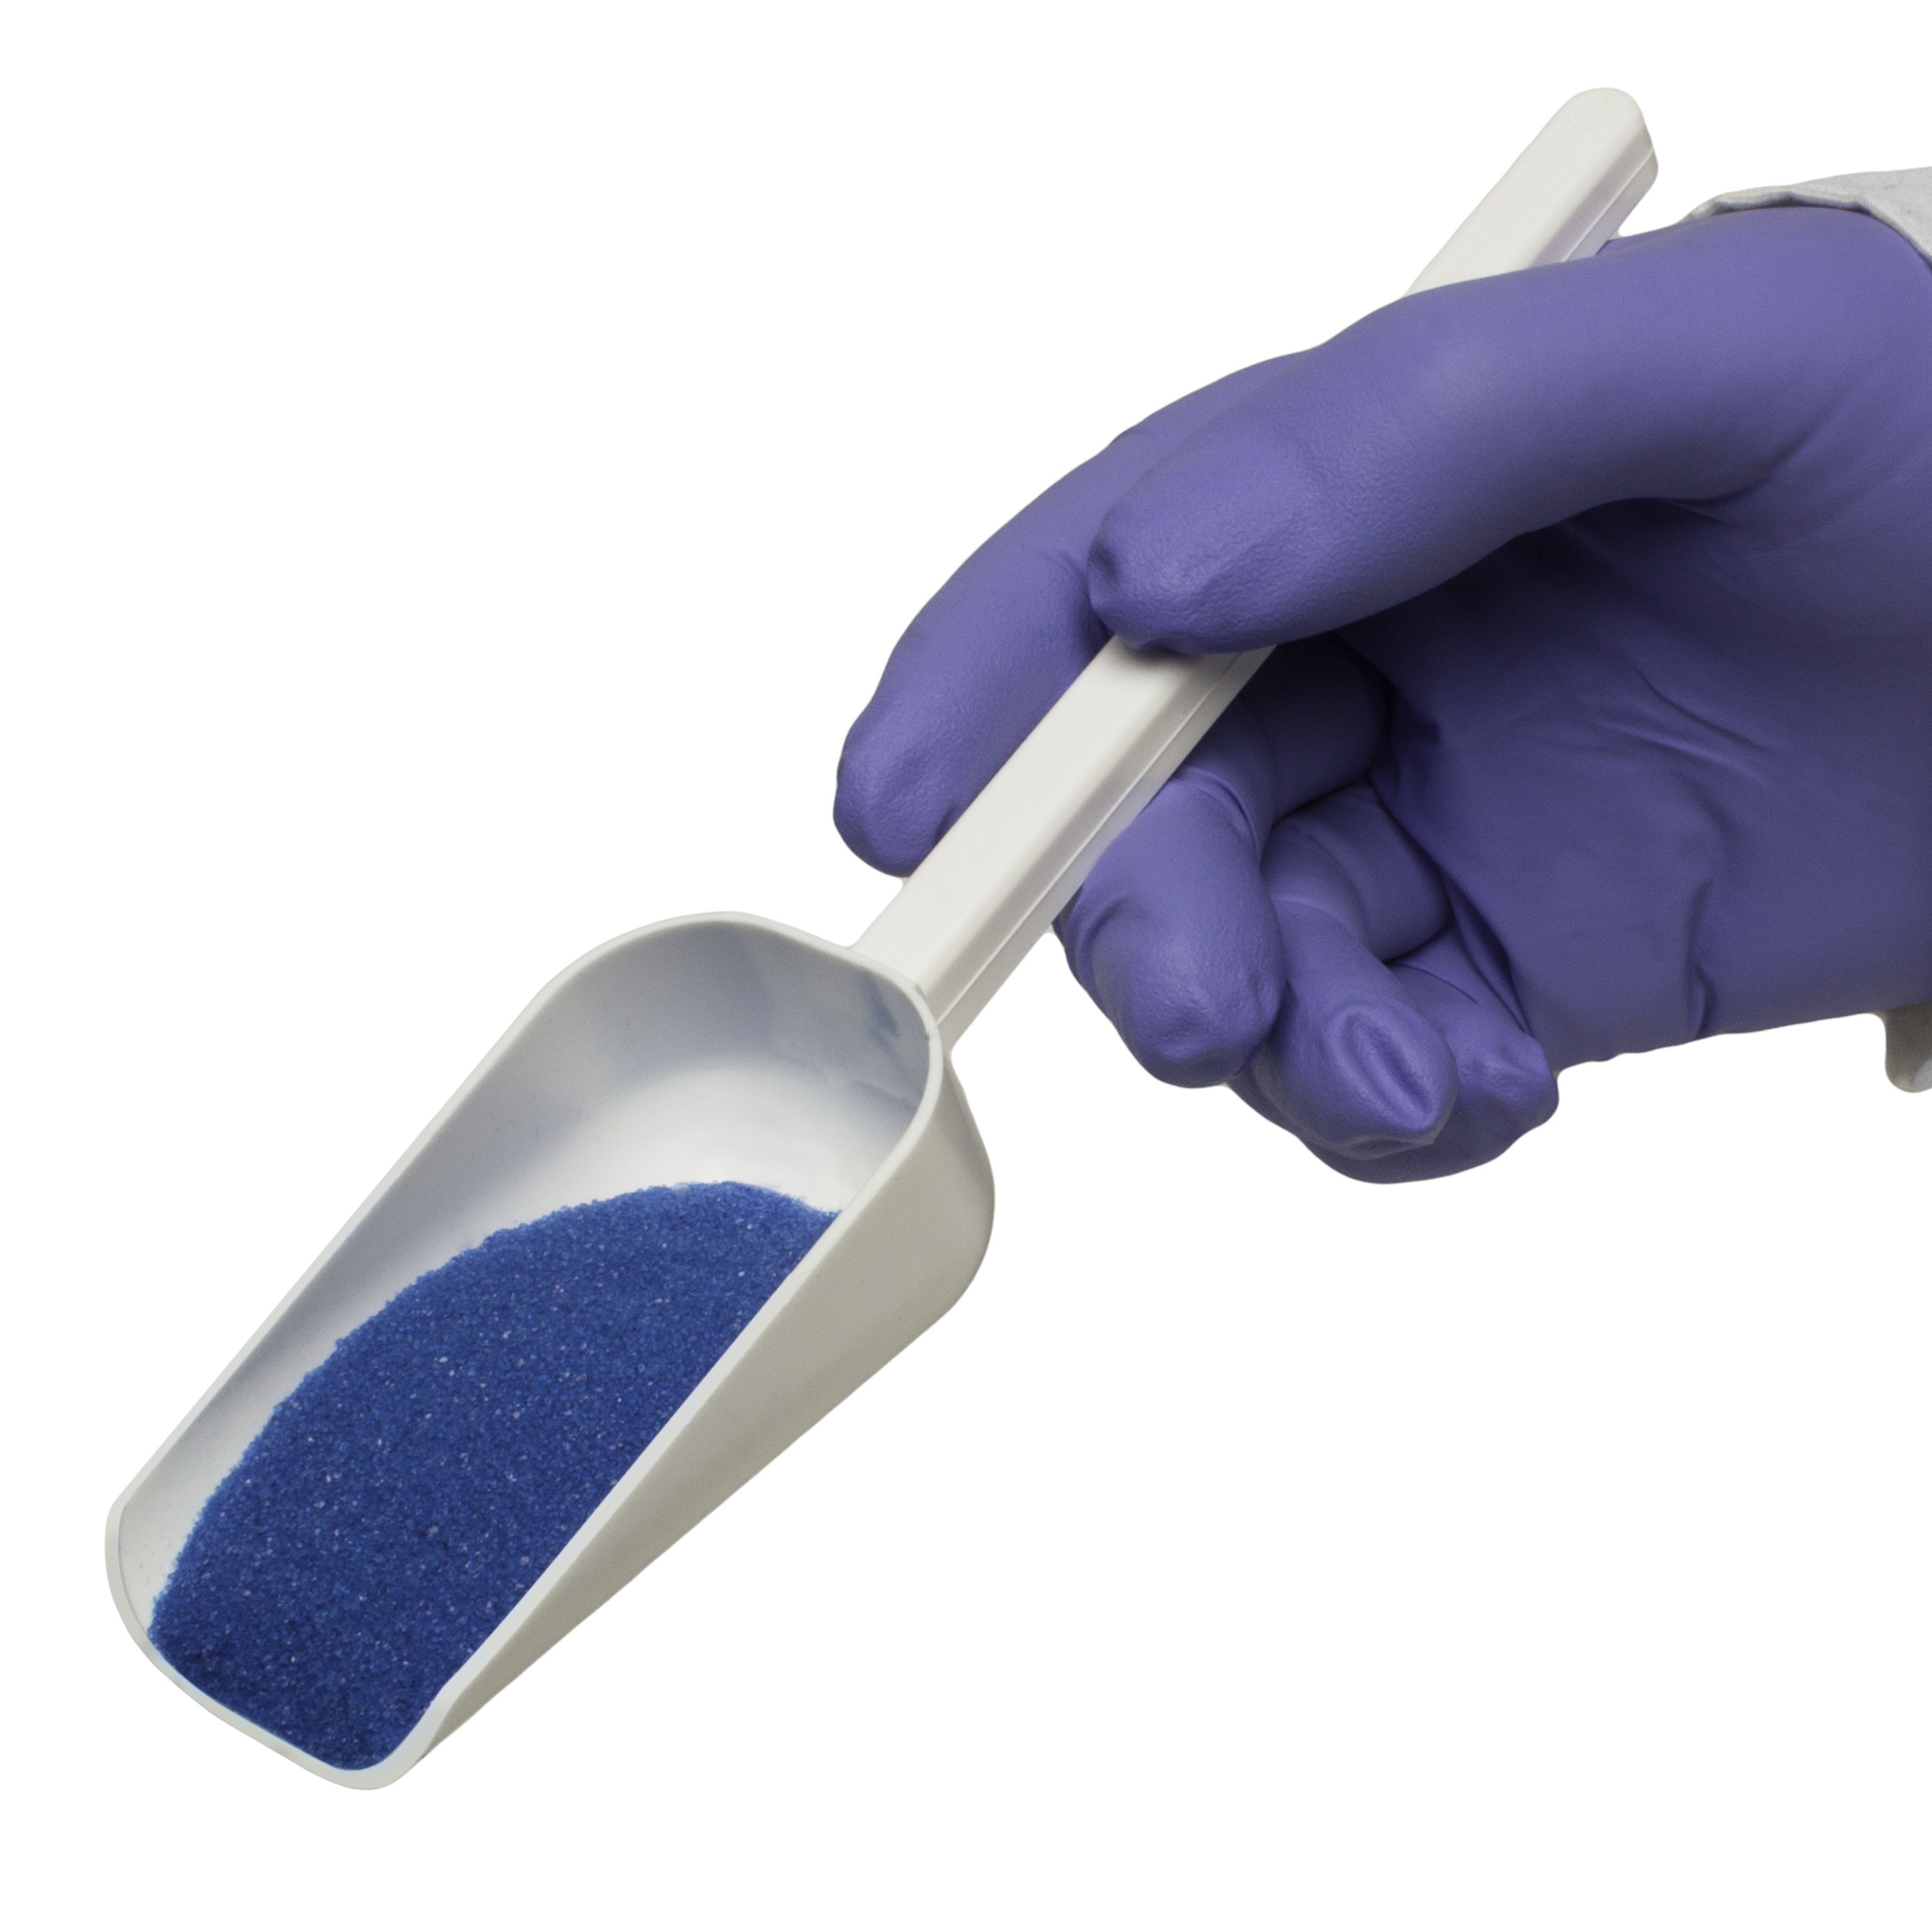 Bel-Art SP Scienceware Sterileware Sterile Mini-Tongs 4.25 in. (108mm)